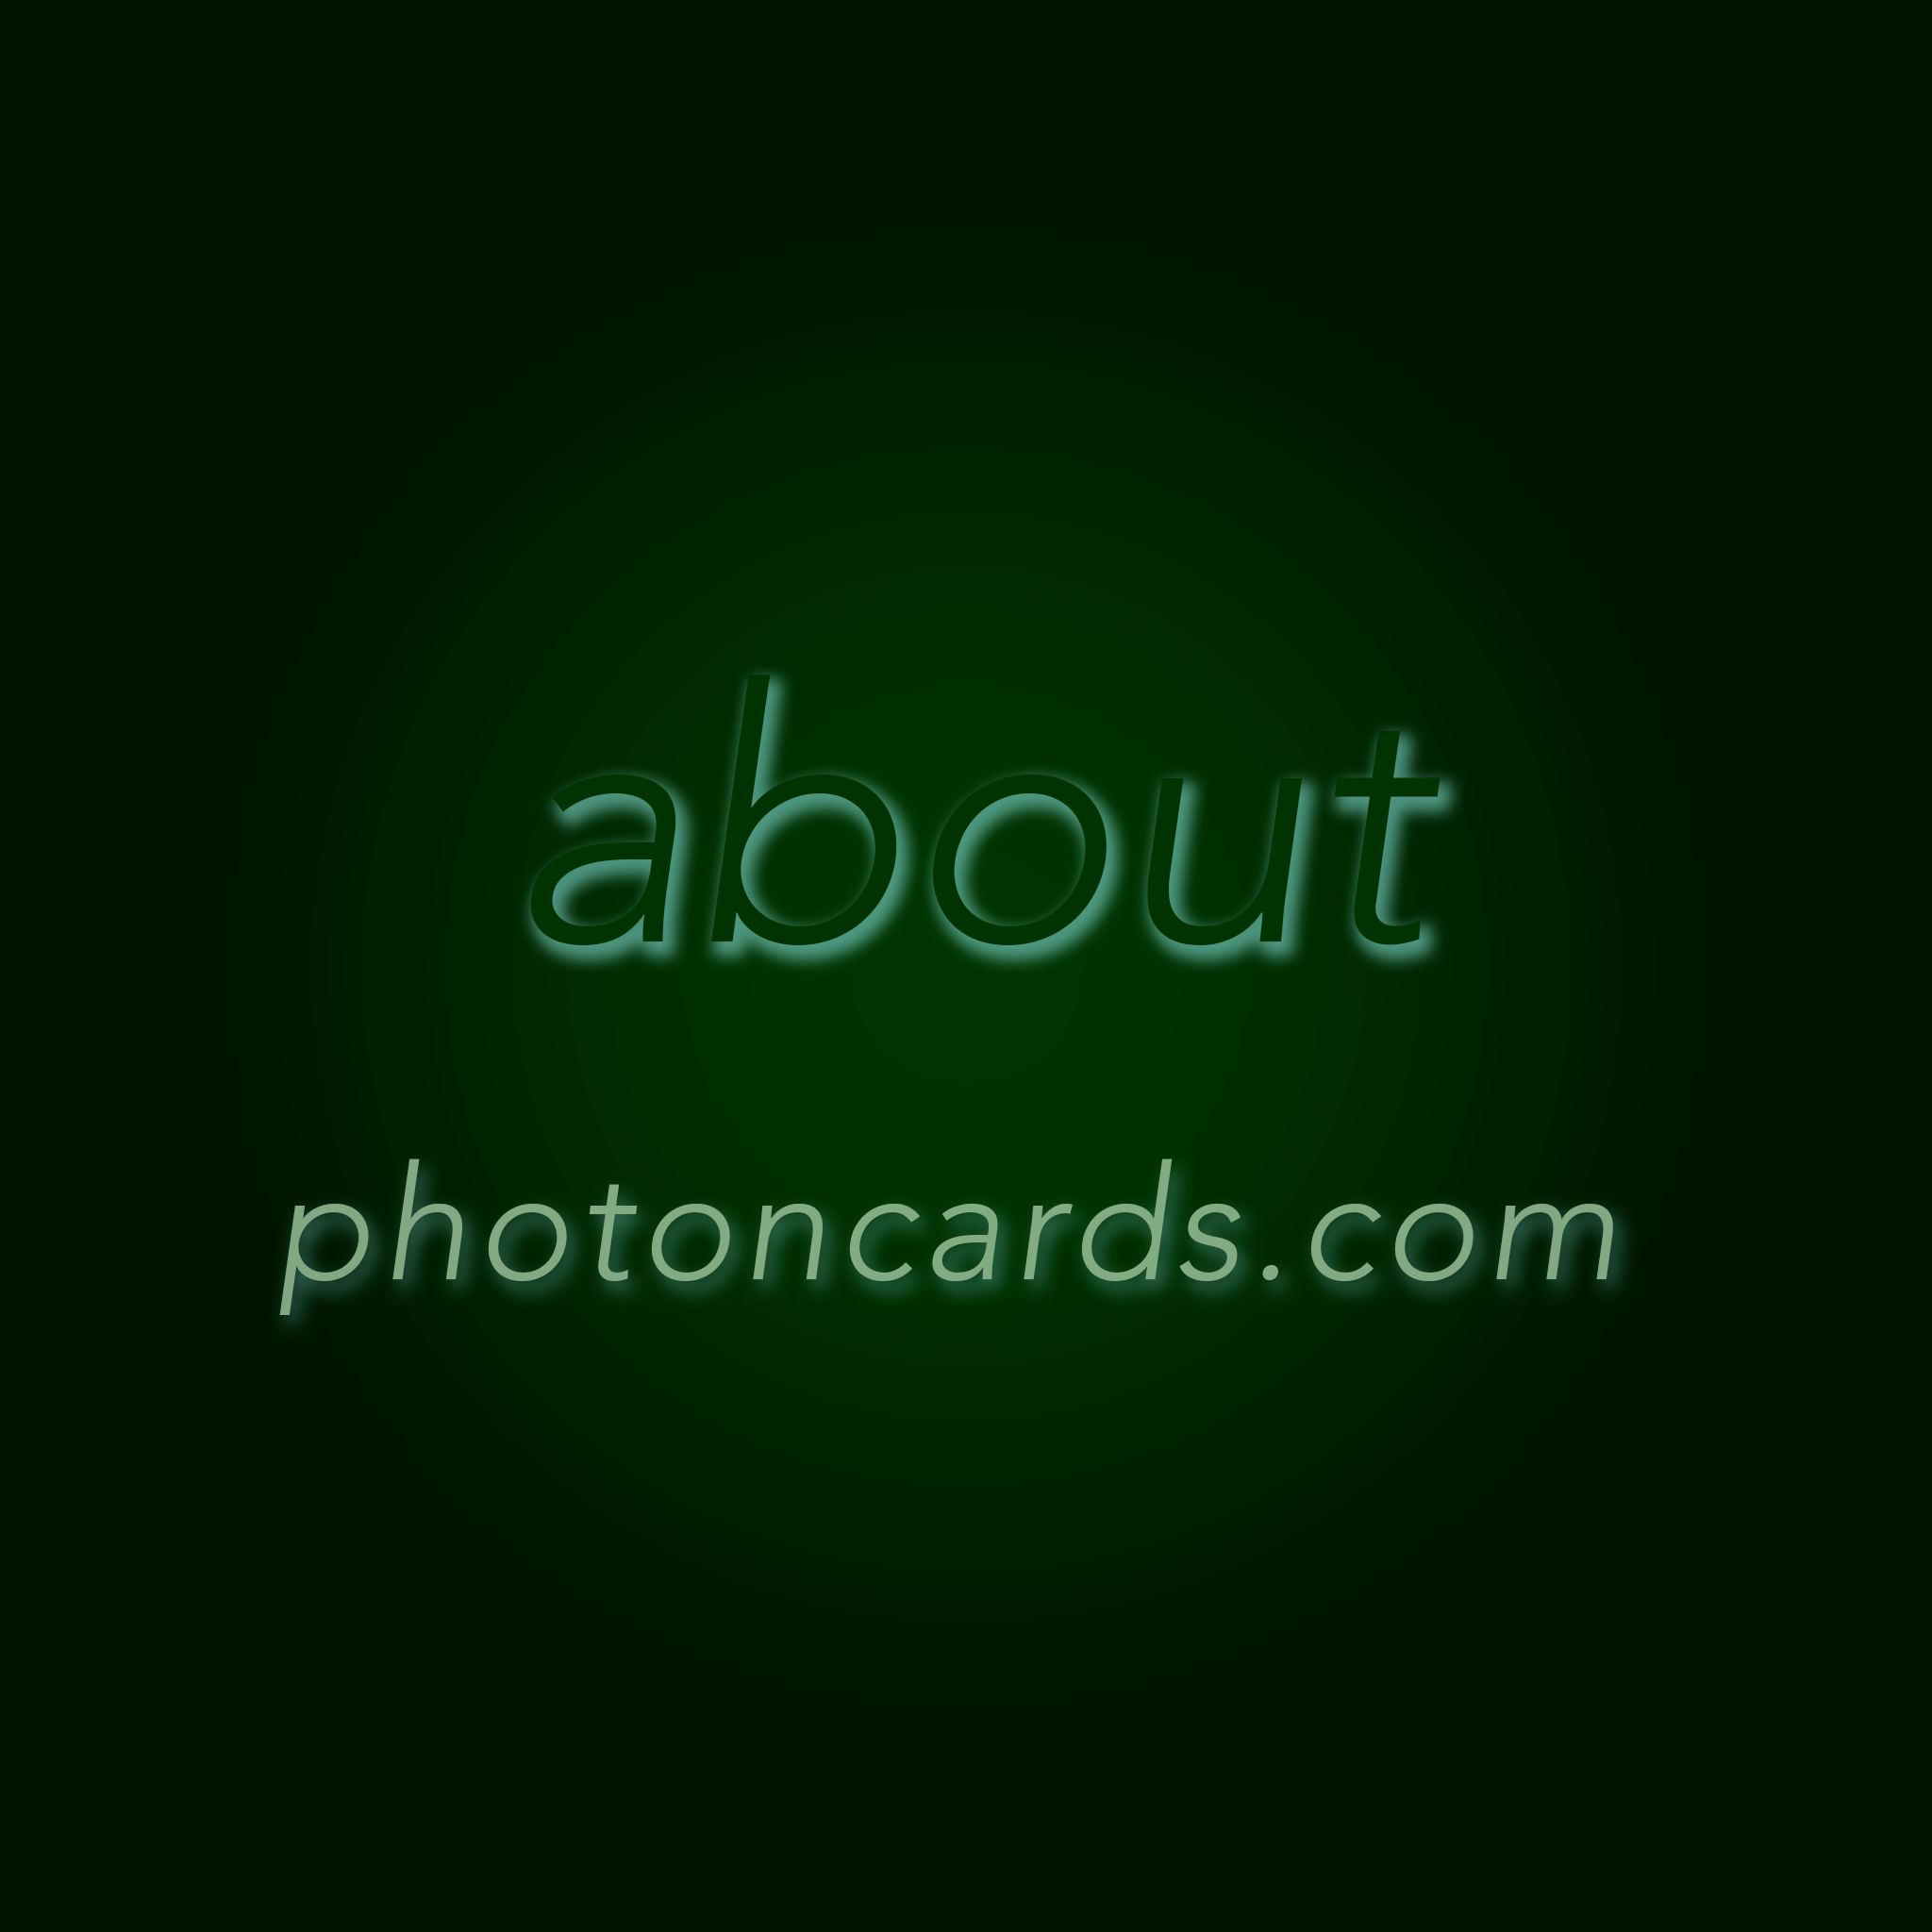 graphic about photoncards dot com